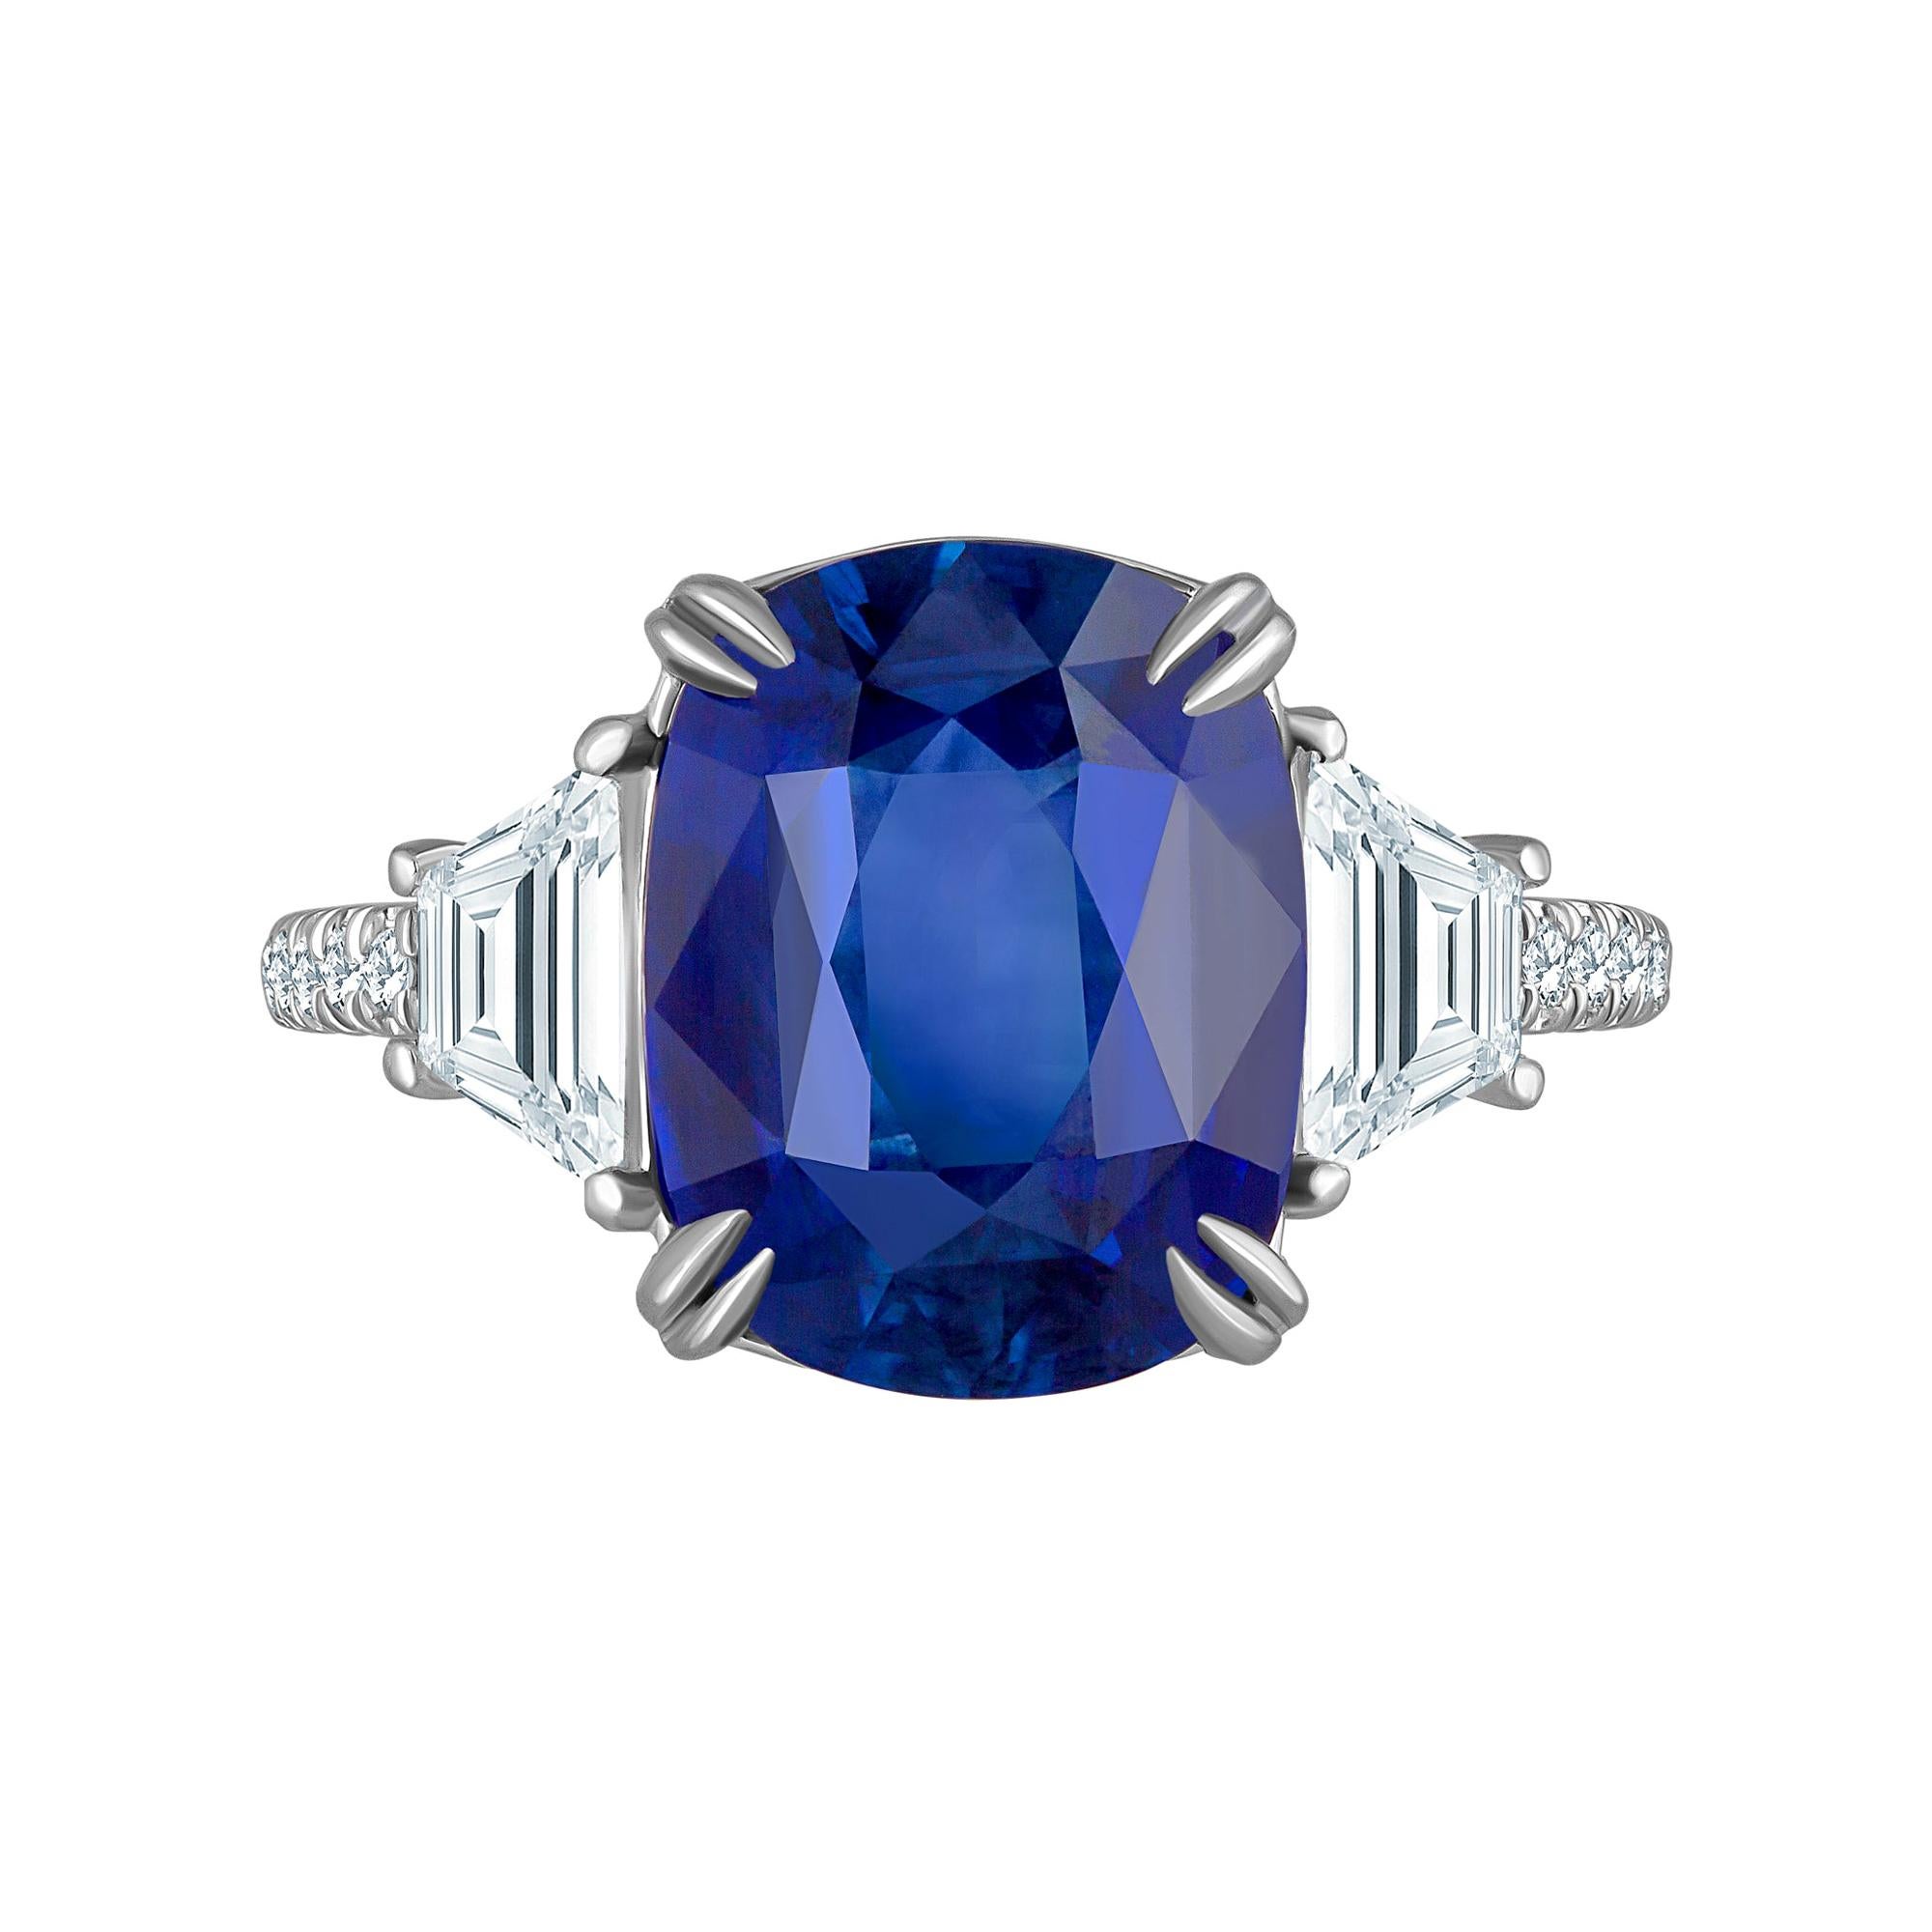 Emilio Jewelry Certified 7.04 Carat Vivid Cornflower Blue Sapphire Diamond Ring